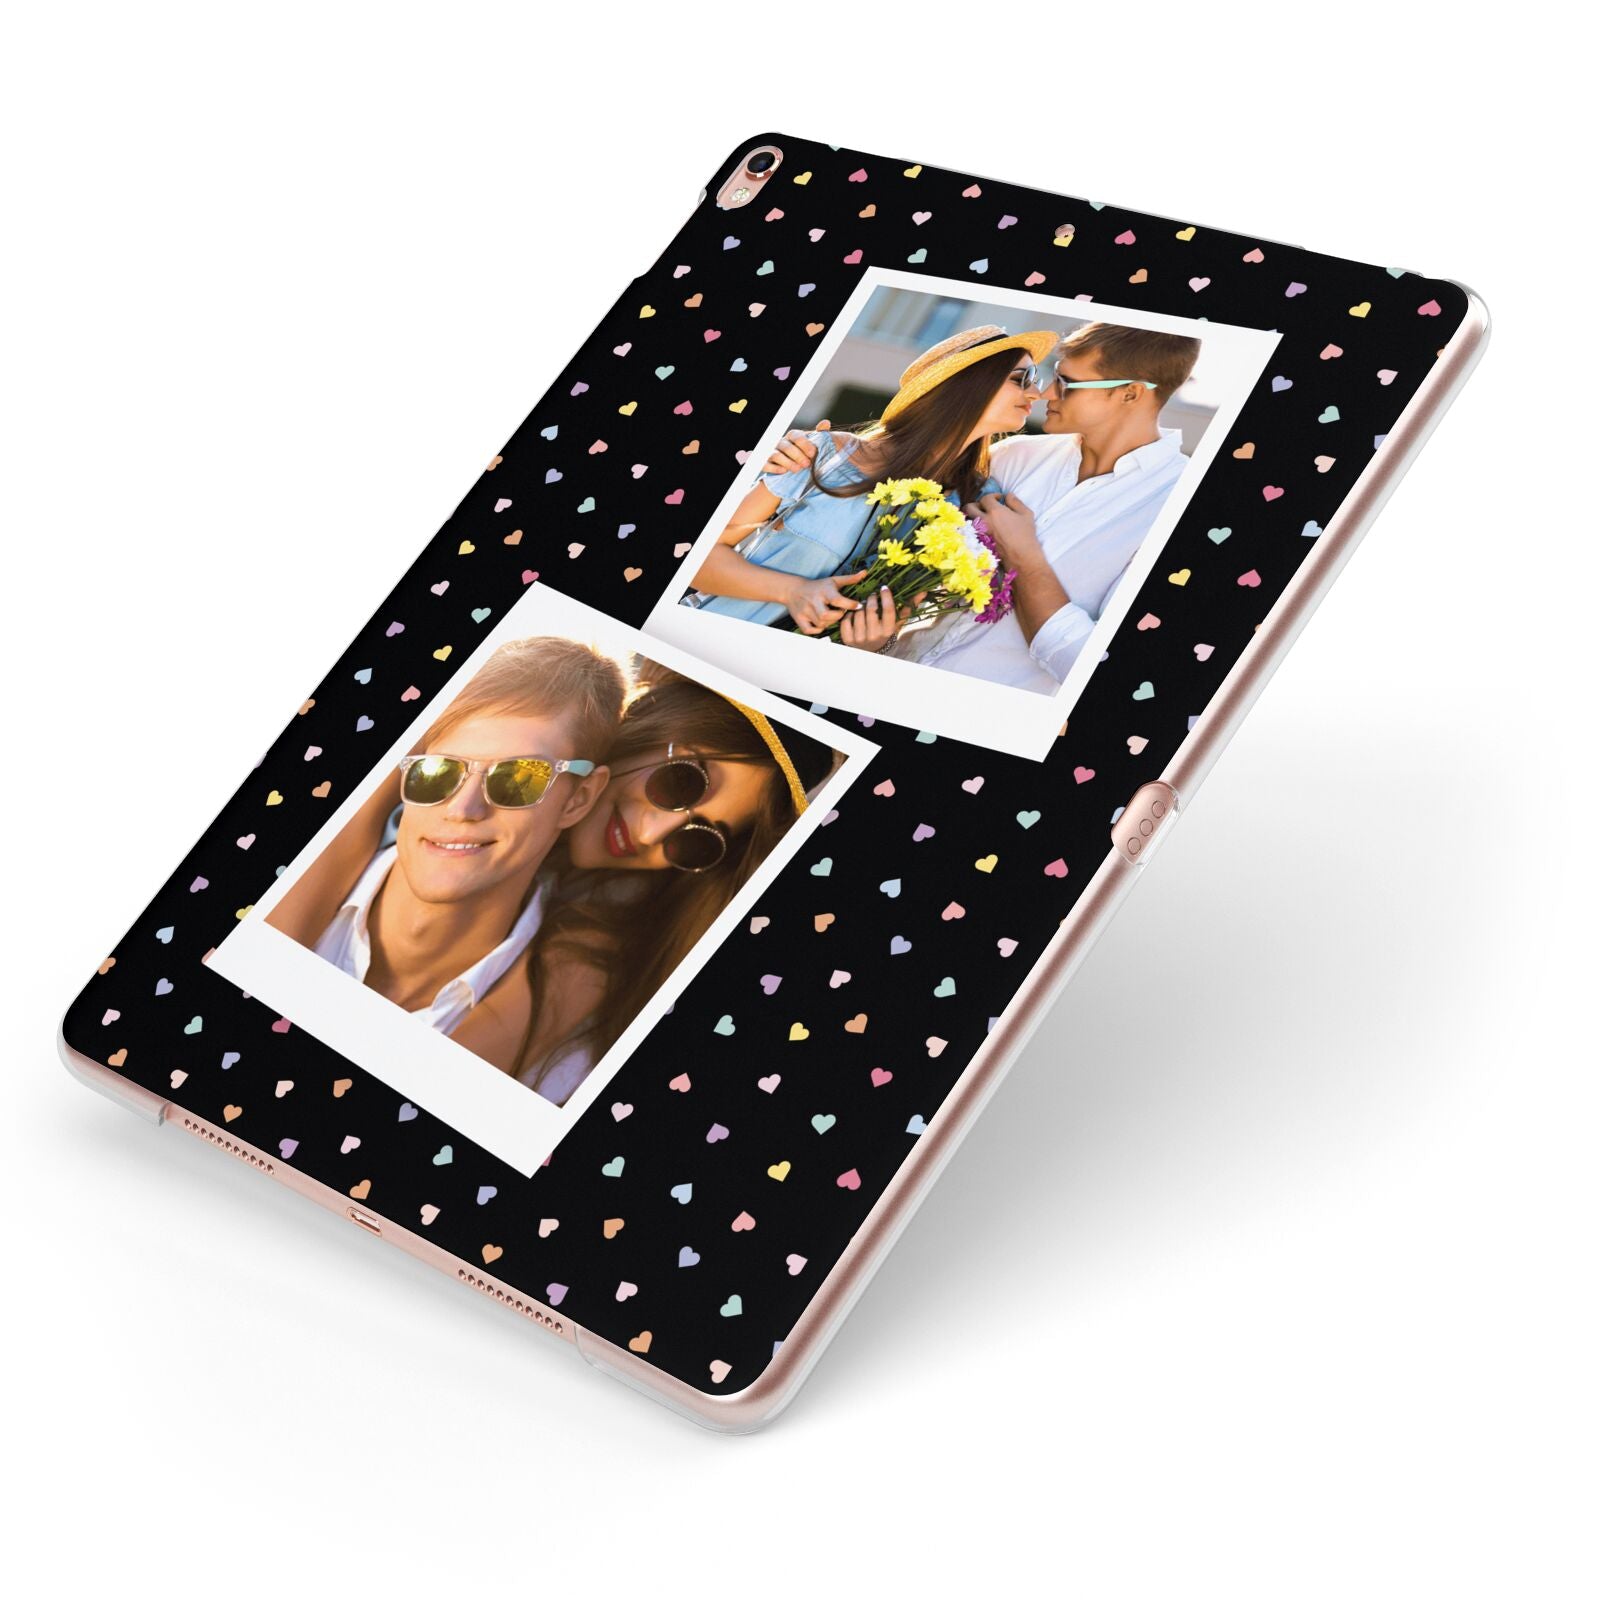 Confetti Heart Photo Apple iPad Case on Rose Gold iPad Side View